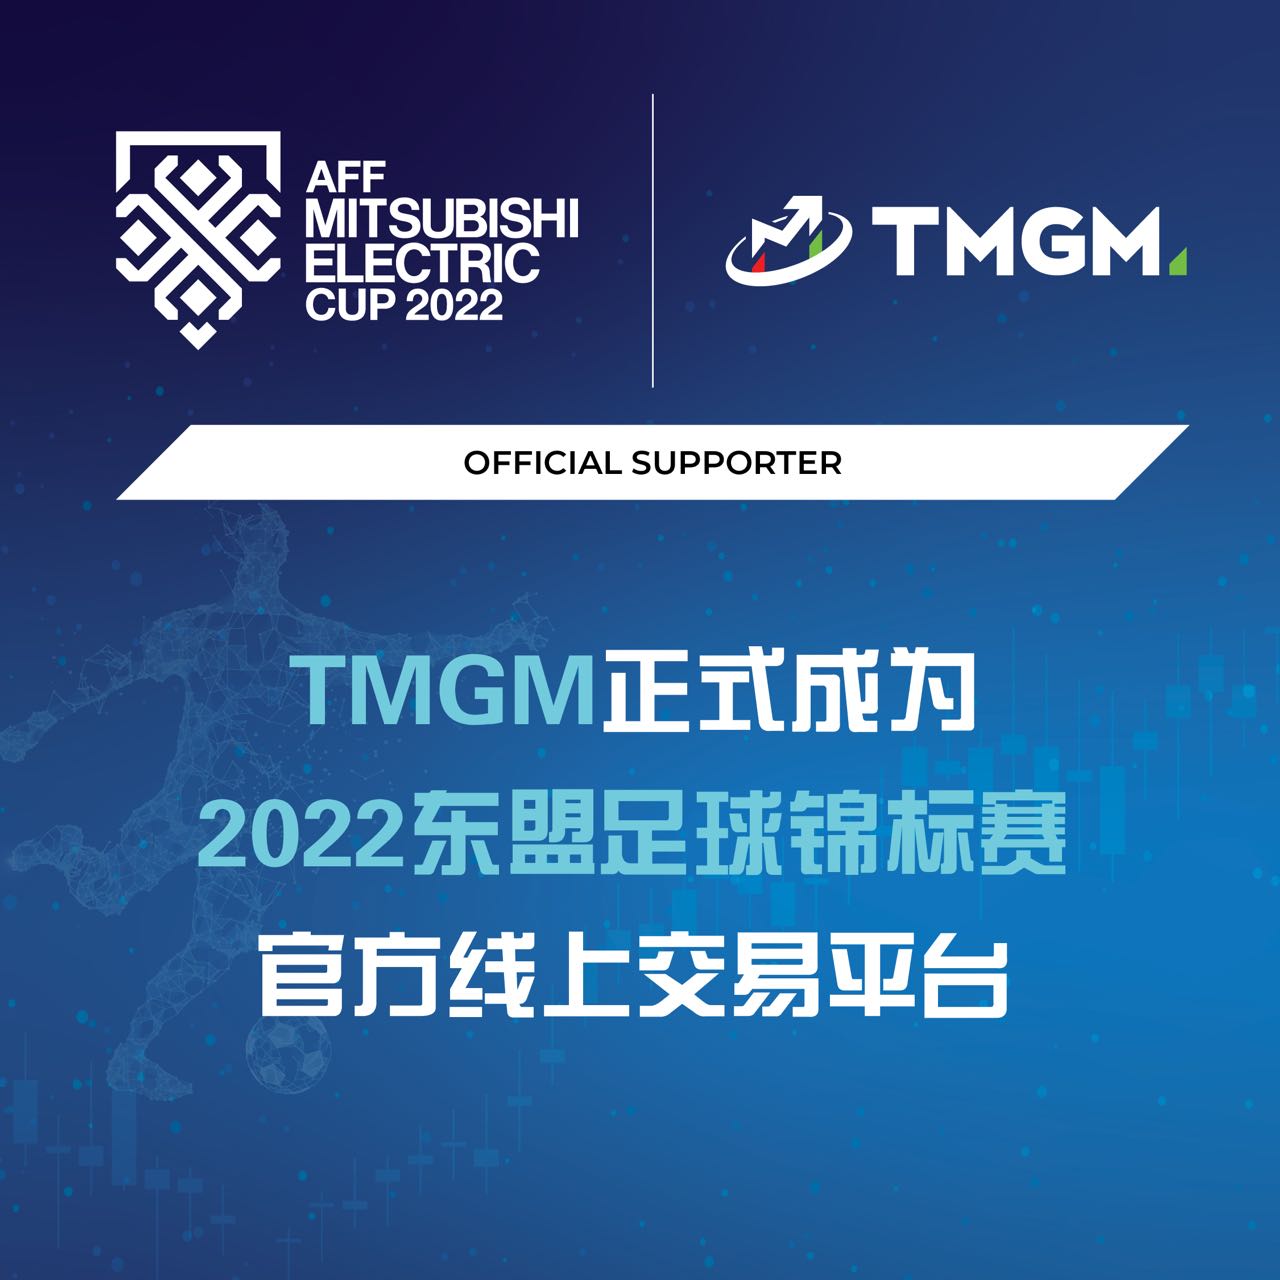 AFF东盟足球锦标赛落下帷幕！TMGM新玩法将合作关系推至新高度！2023，期待东南亚市场带领TMGM实现新突破！